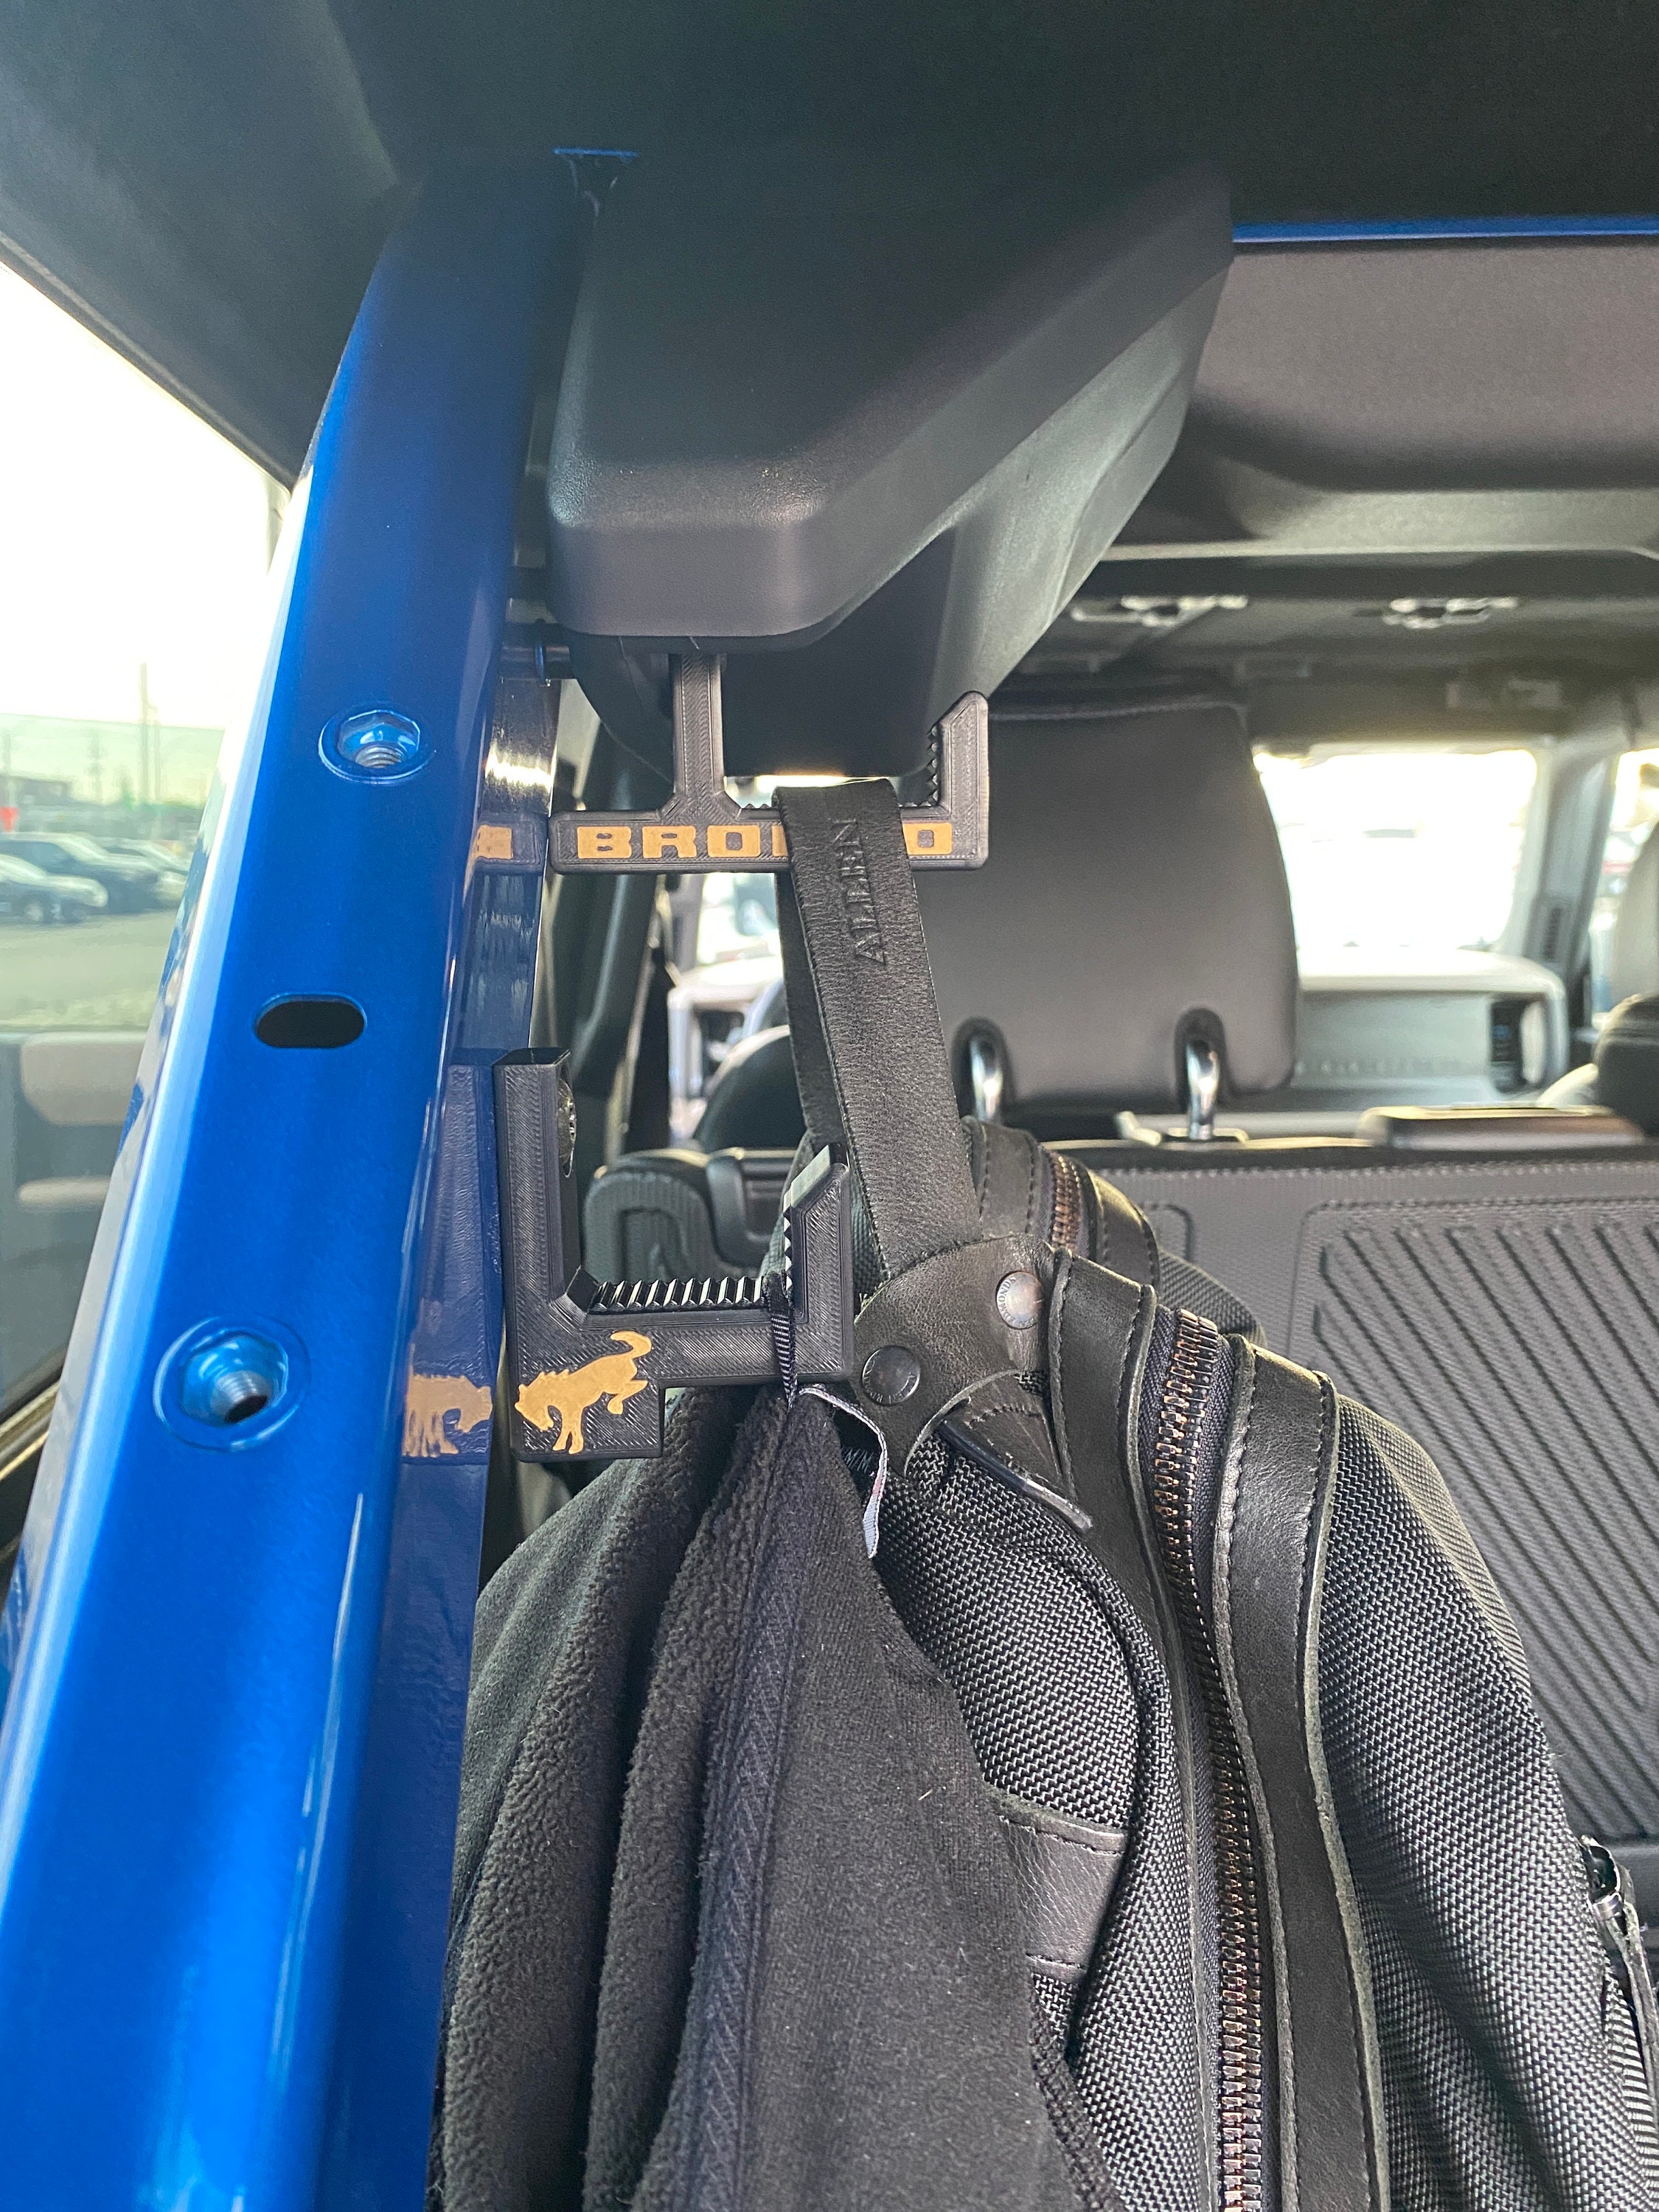 Car Headrest Hook Hanger Purse Premium Leather Stainless Steel Car